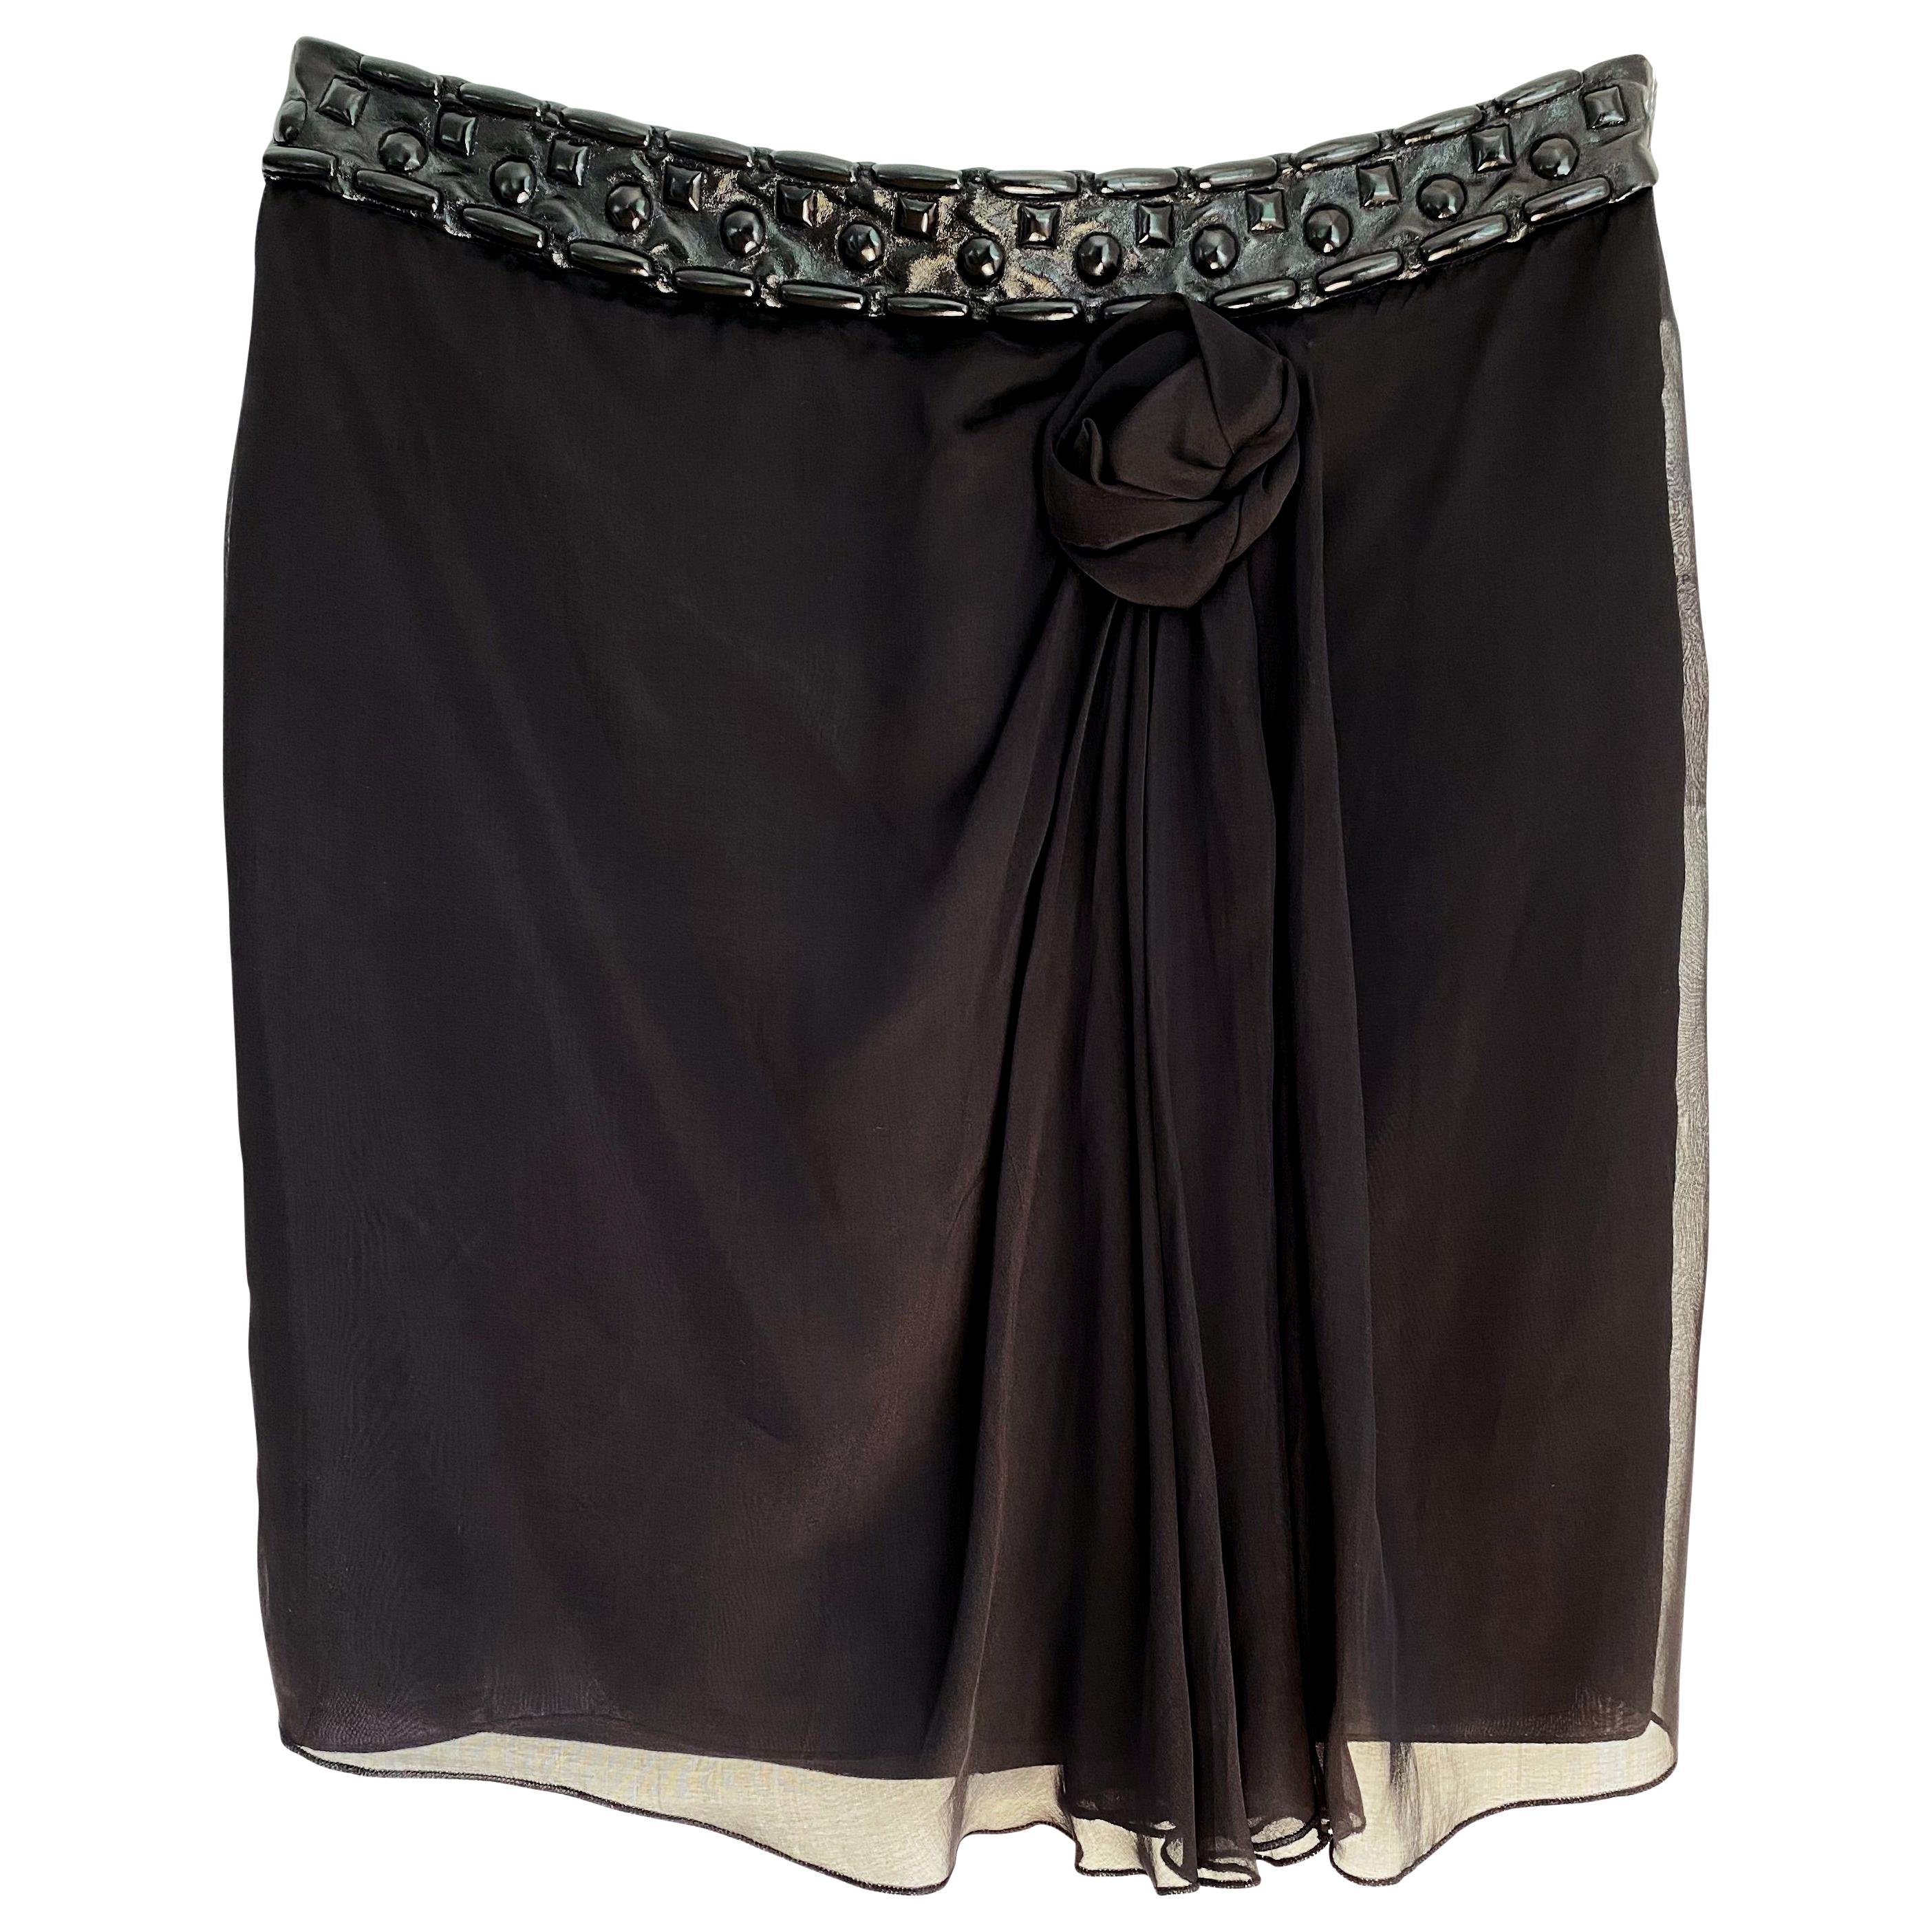 Philosophy di Alberta Ferretti embellished black silk skirt with rose - NWT For Sale